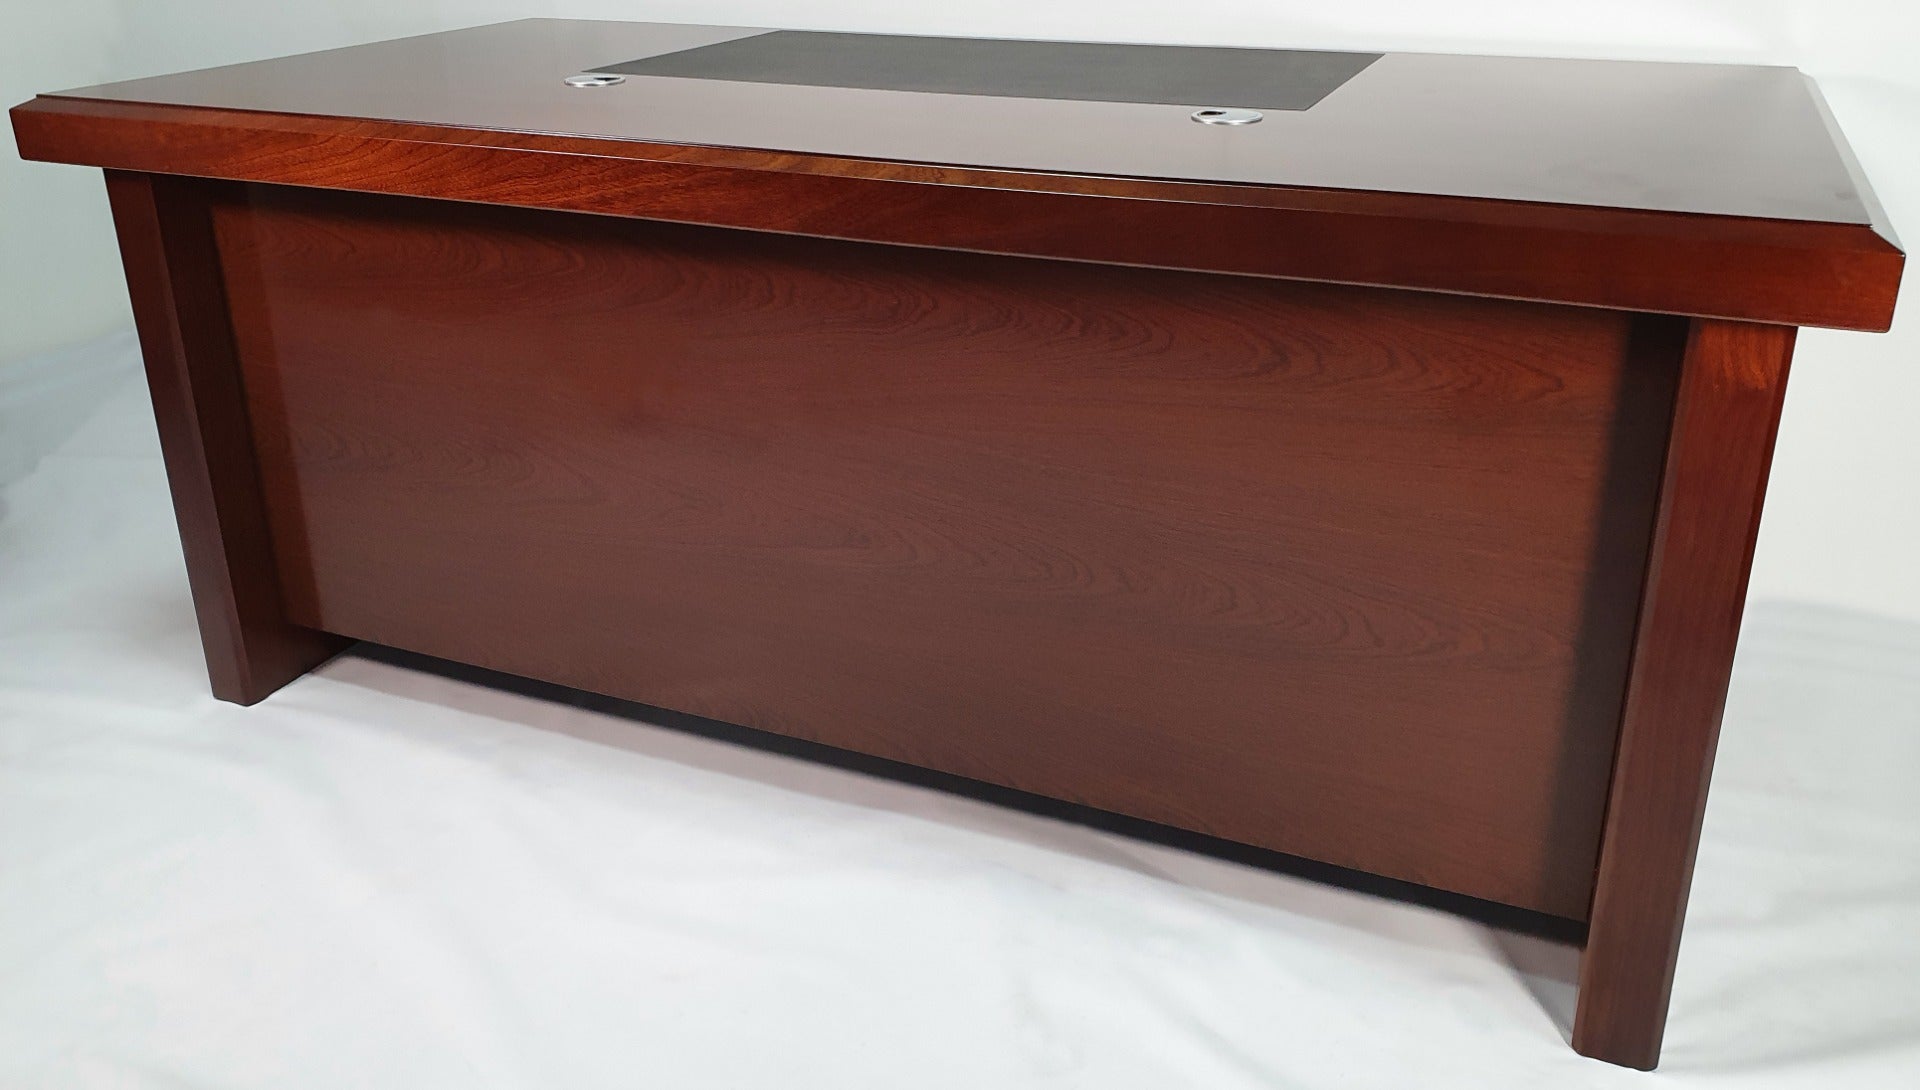 Walnut Real Wood Veneer Executive Desk with Pedestal and Return - BSE181 UK